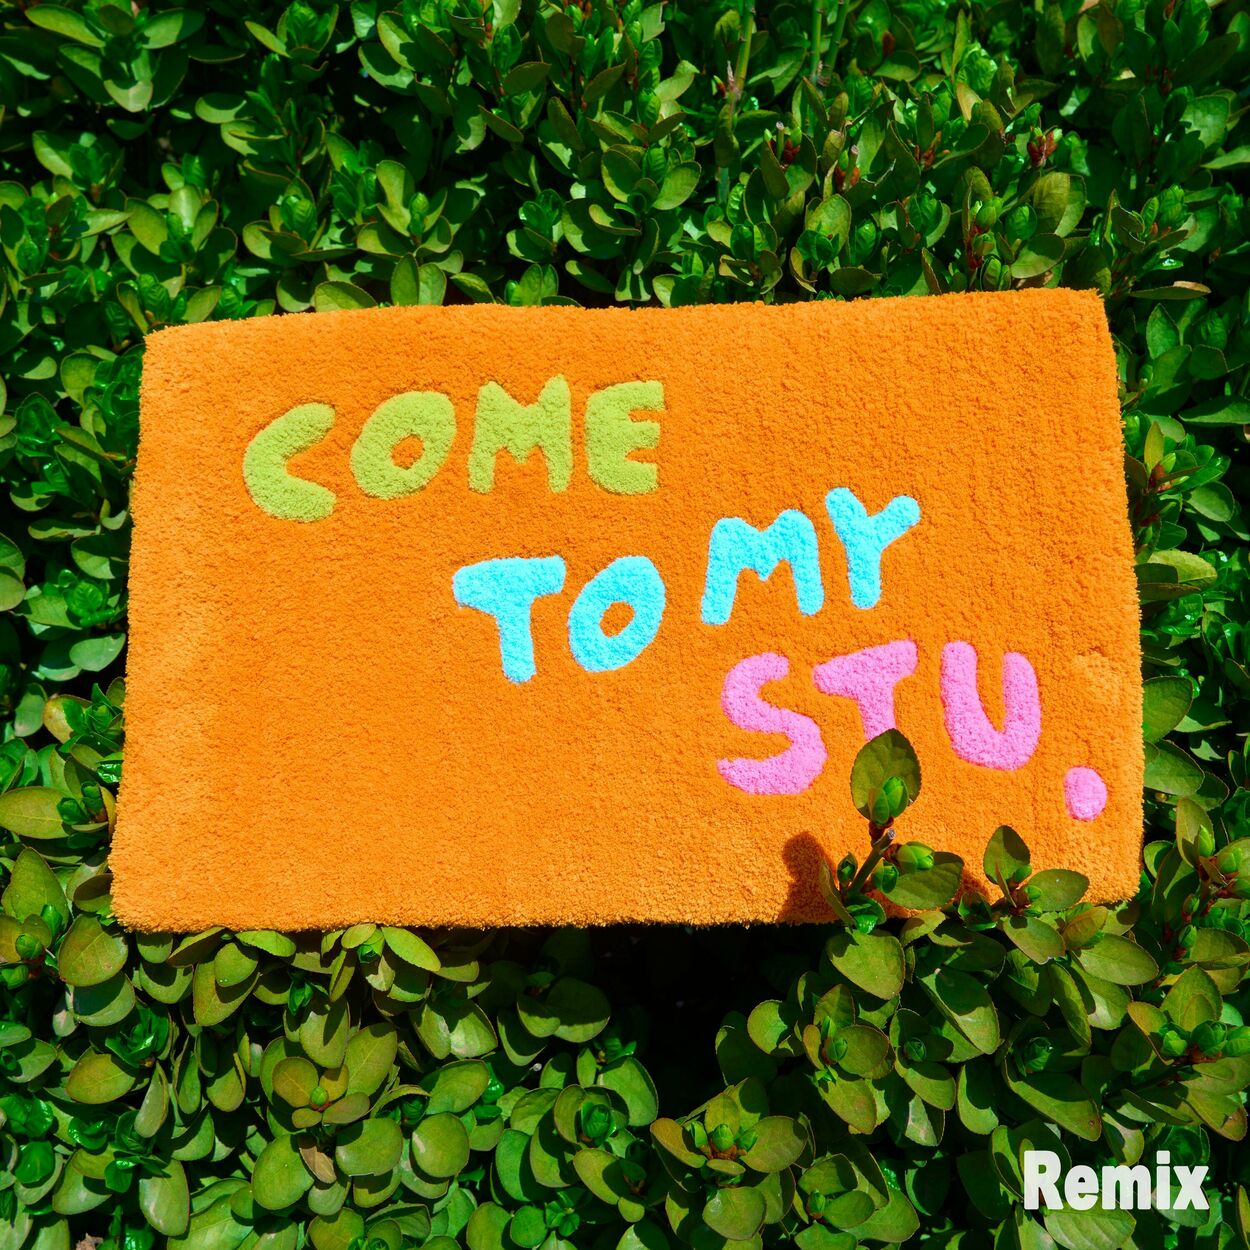 CRUCiAL STAR – come to my stu (Remix) [feat. Leellamarz] – Single